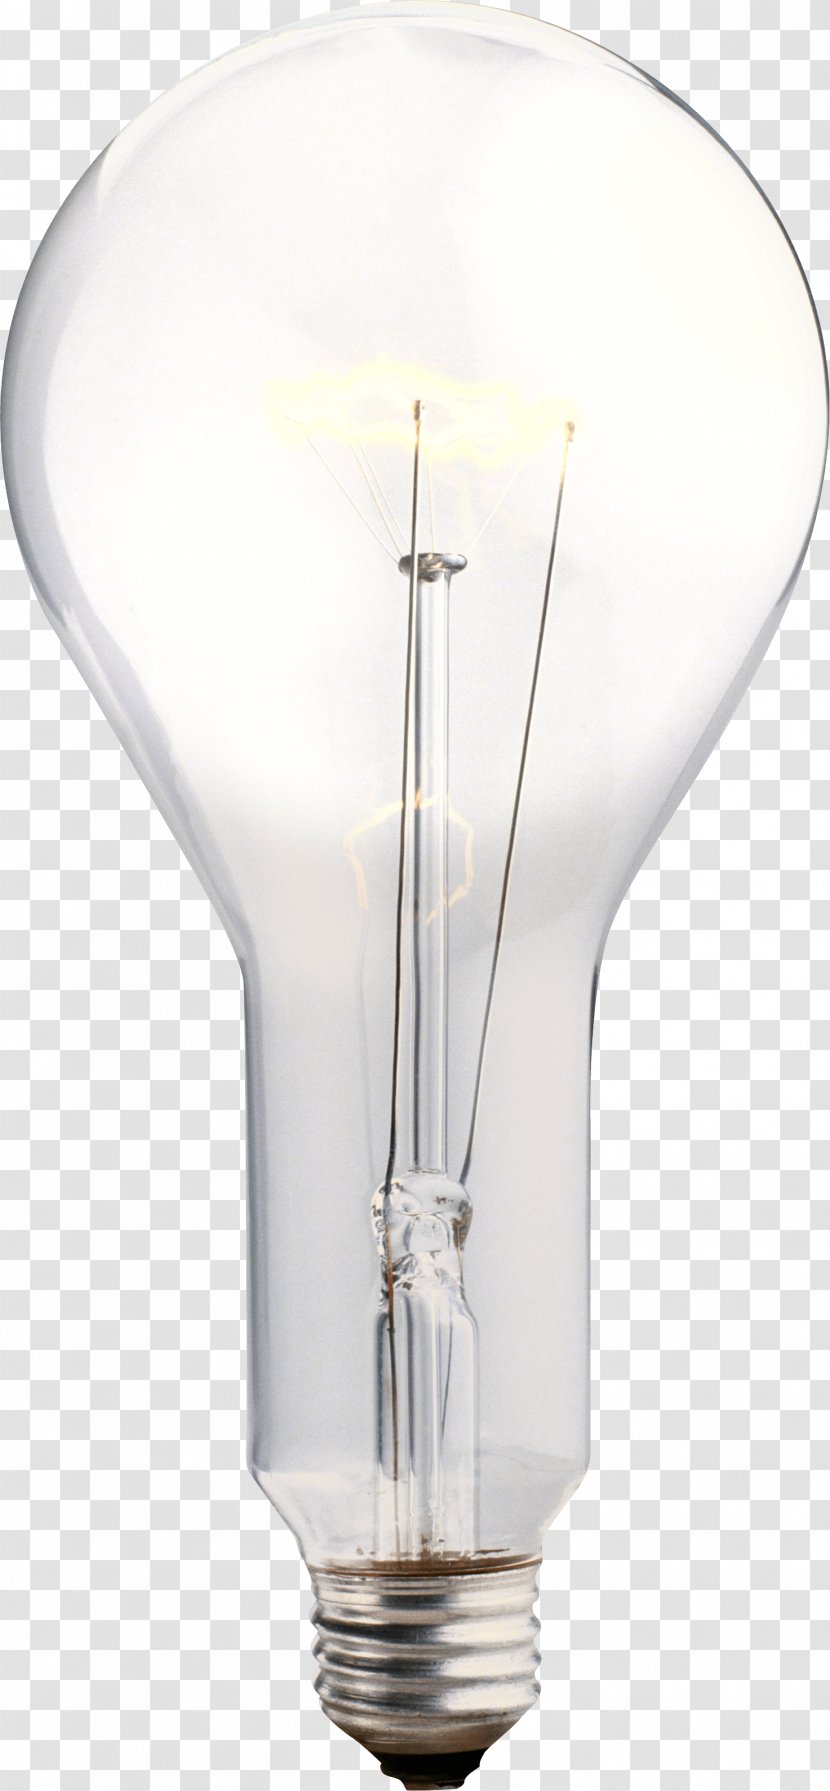 Incandescent Light Bulb Lamp Electricity - Electrical Filament - Image Transparent PNG